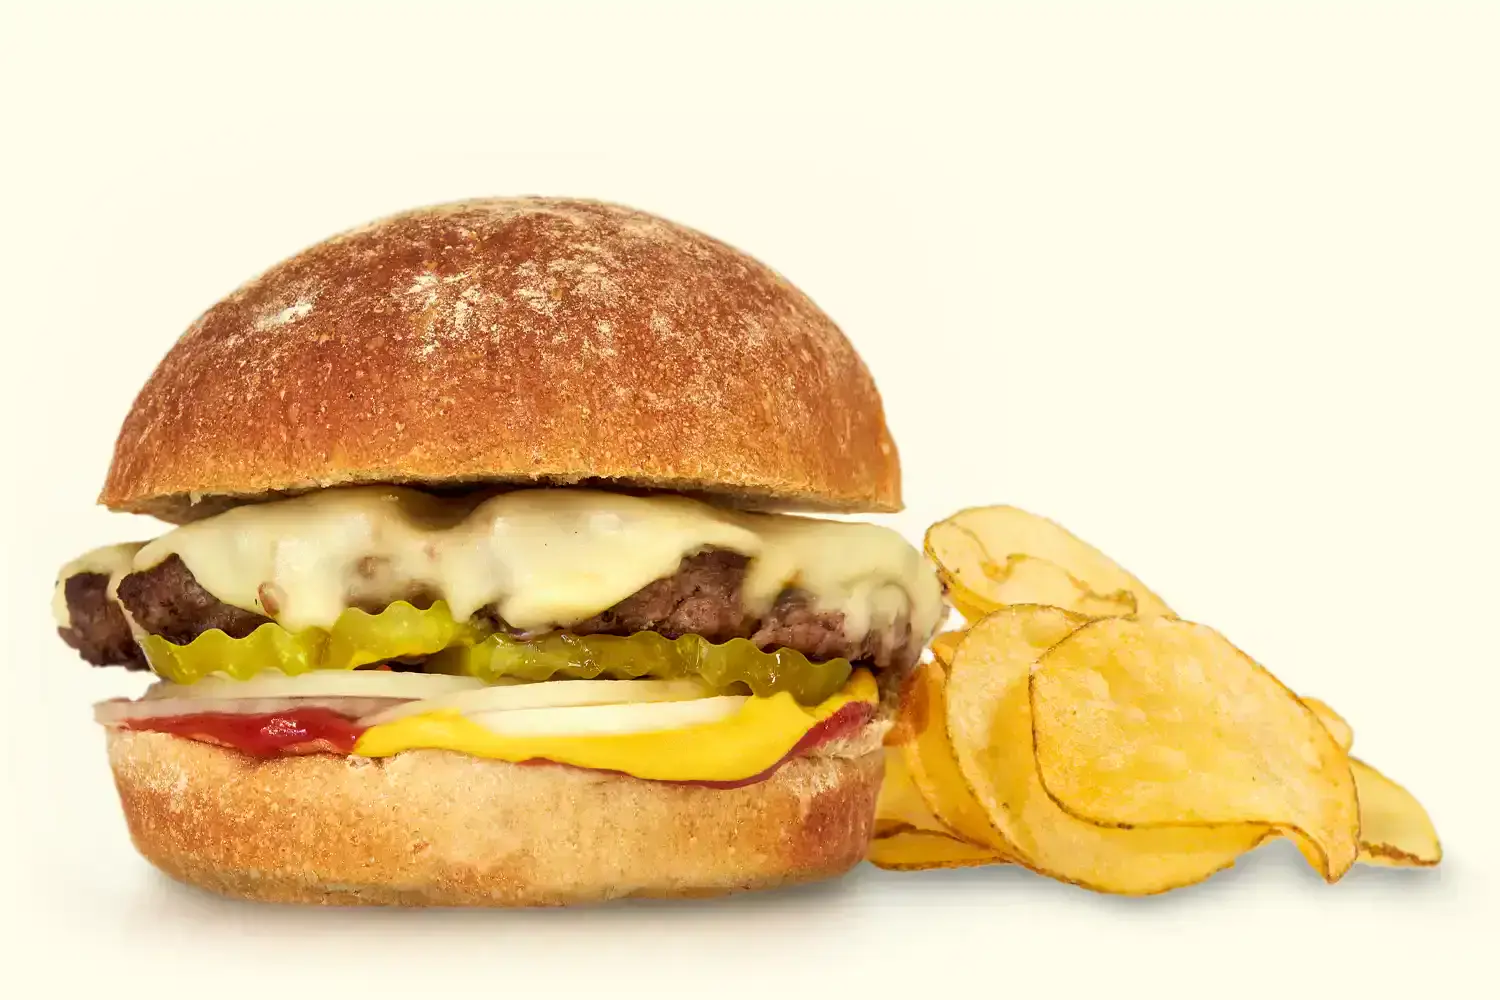 The Classic Burger